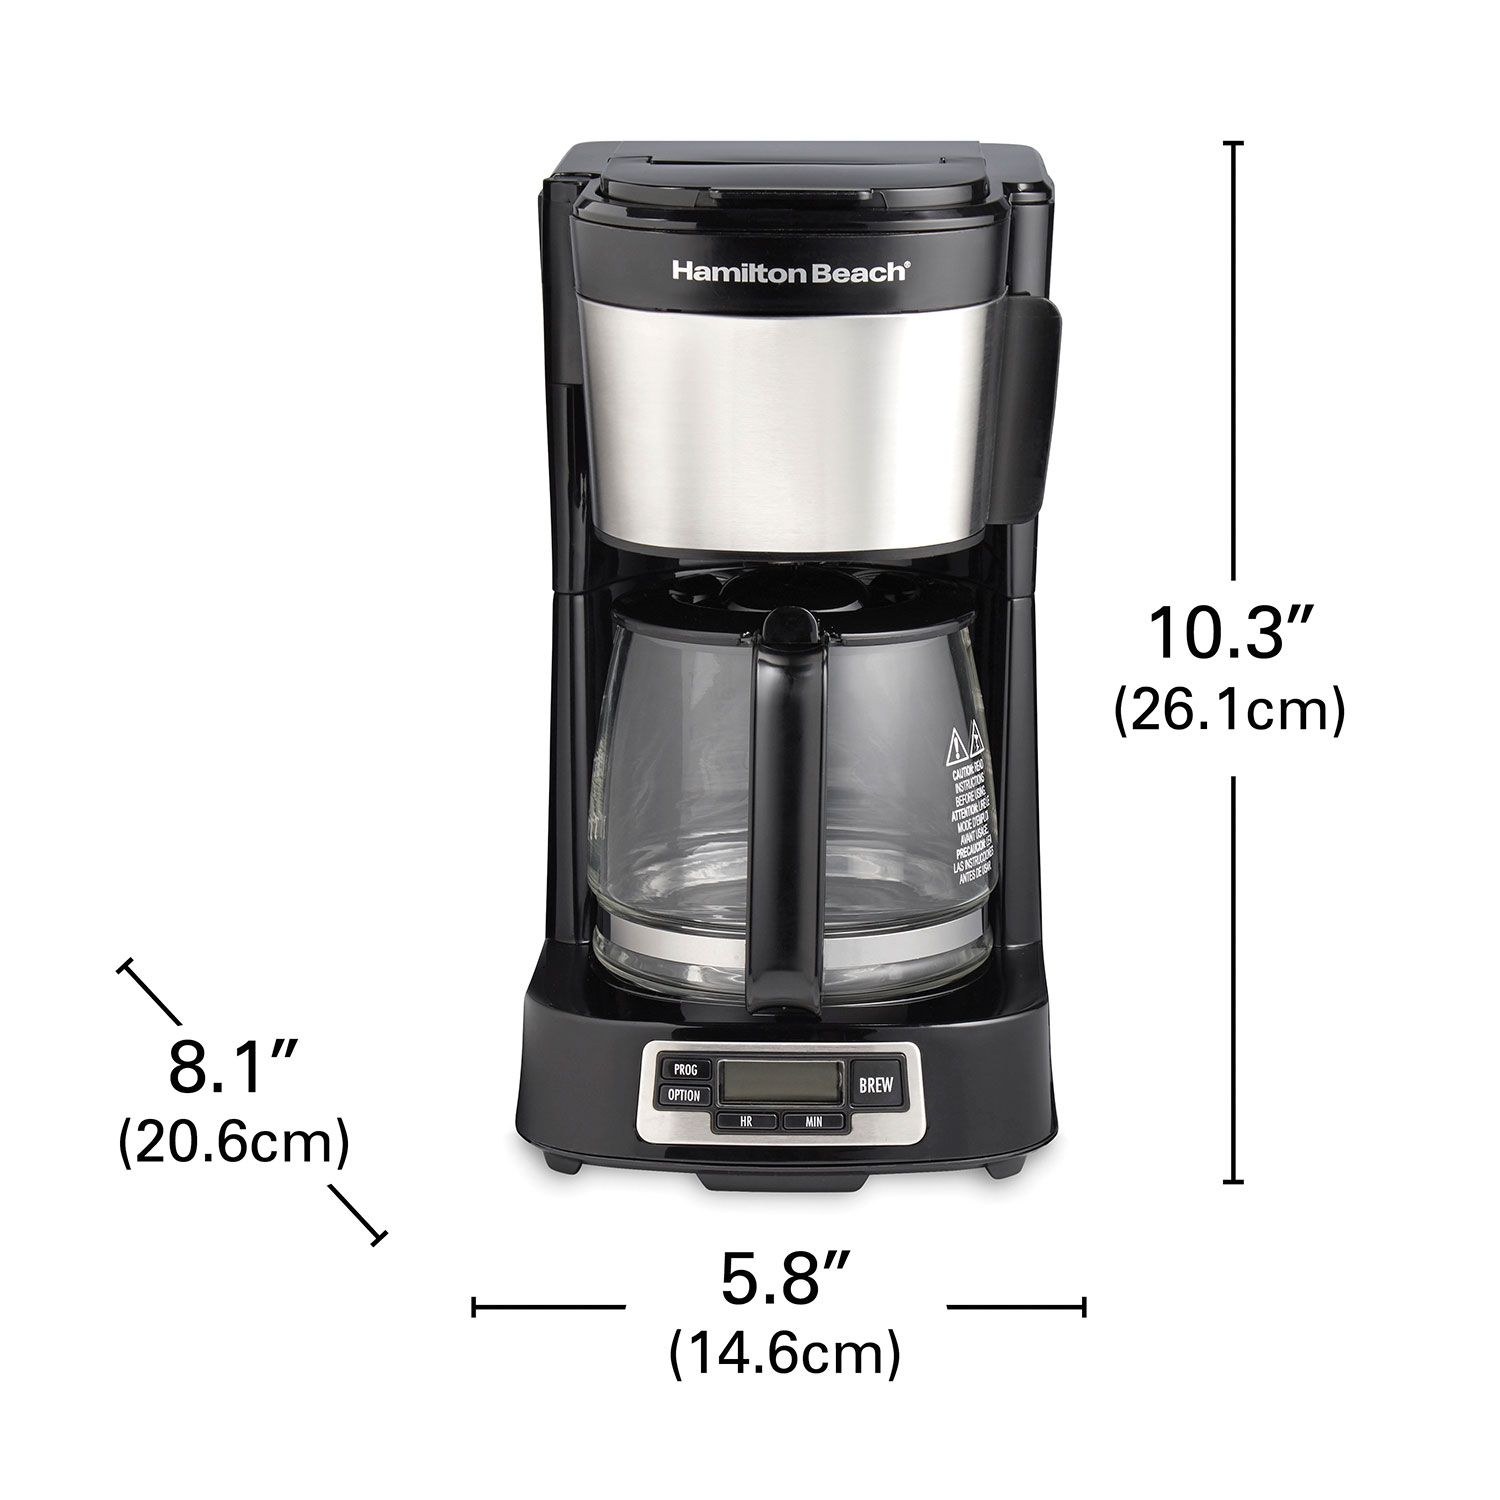 Hamilton Beach Coffee Maker, 5 Cup, FrontFill Compact